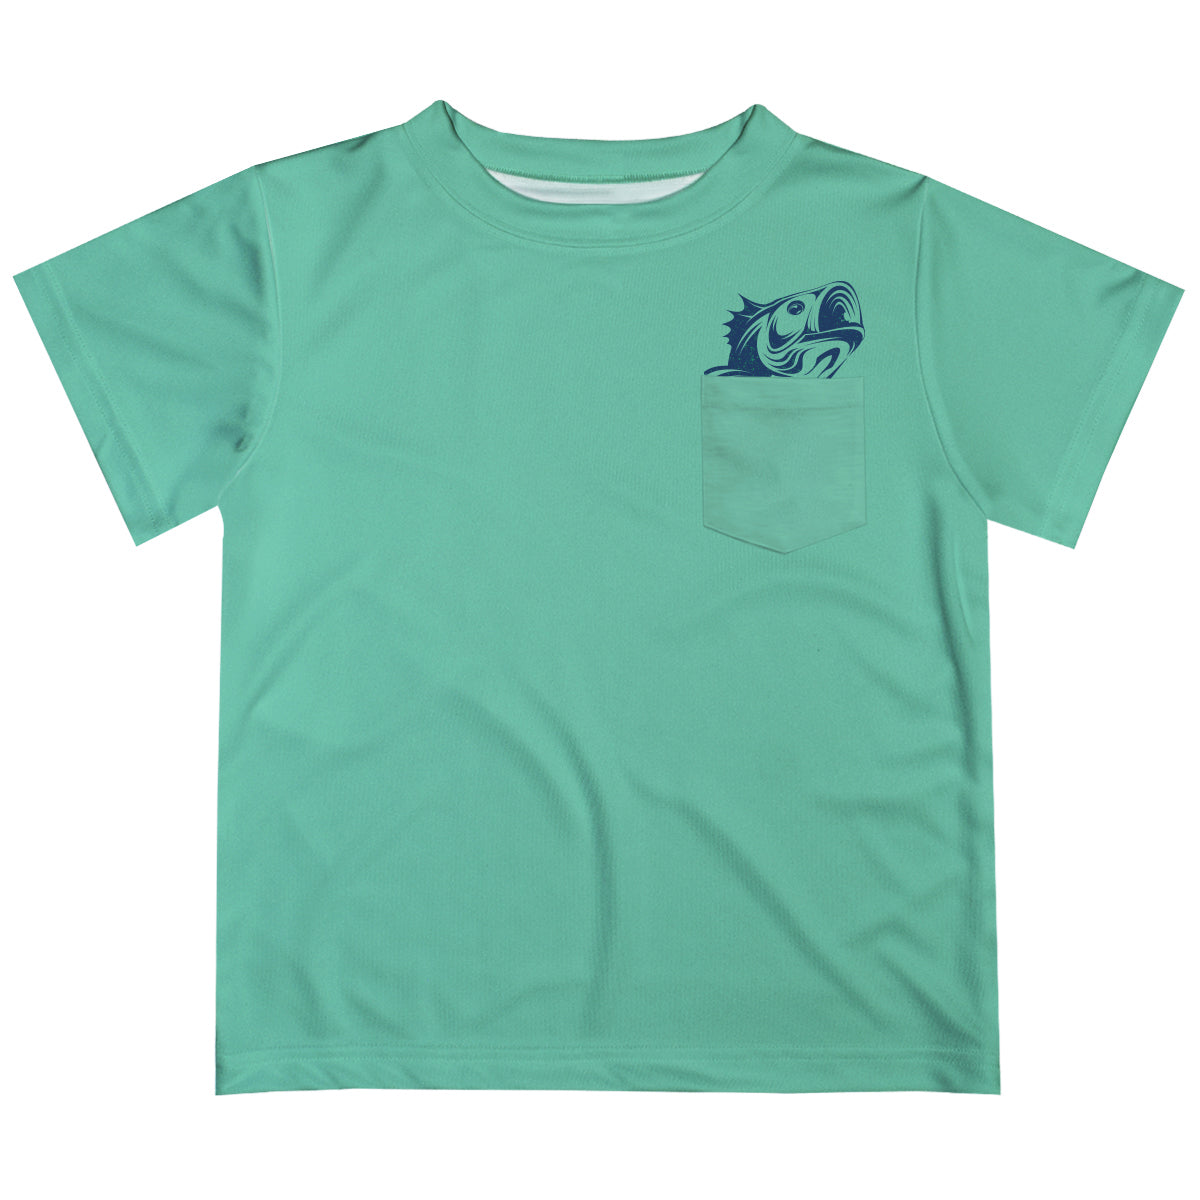 Fishing Green Short Sleeve Tee Shirt With Pocket